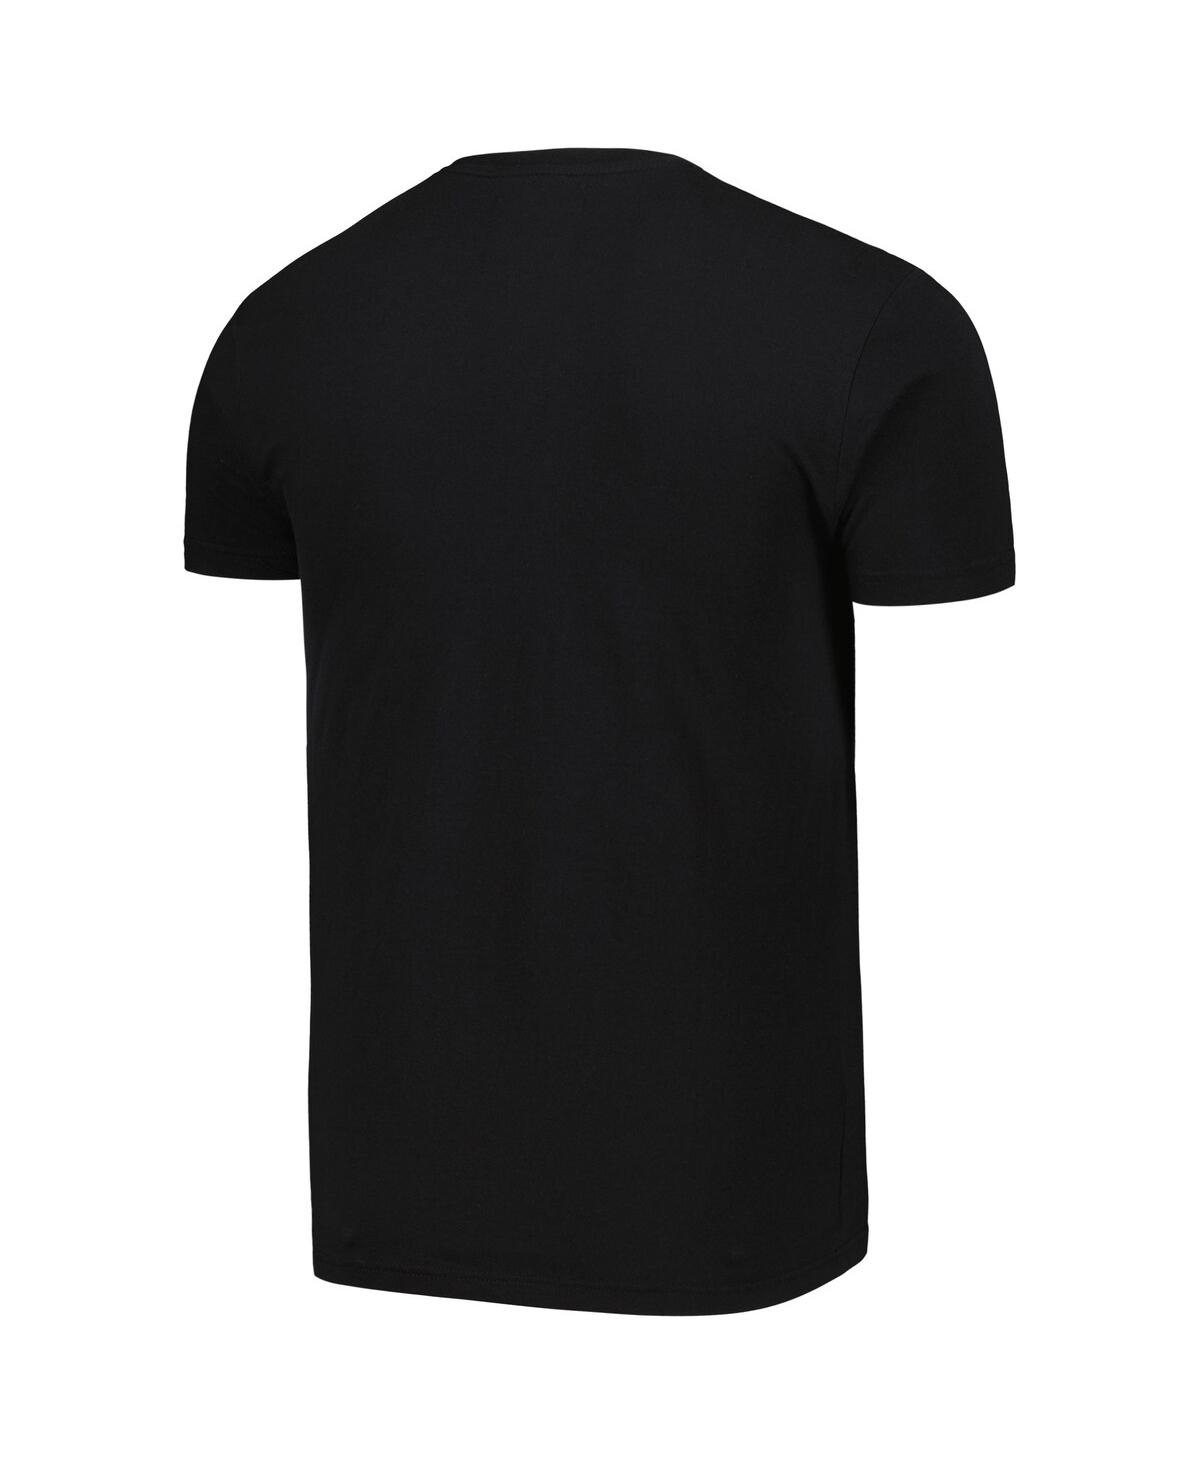 Shop American Needle Men's And Women's  Black Pink Floyd Brass Tacks T-shirt